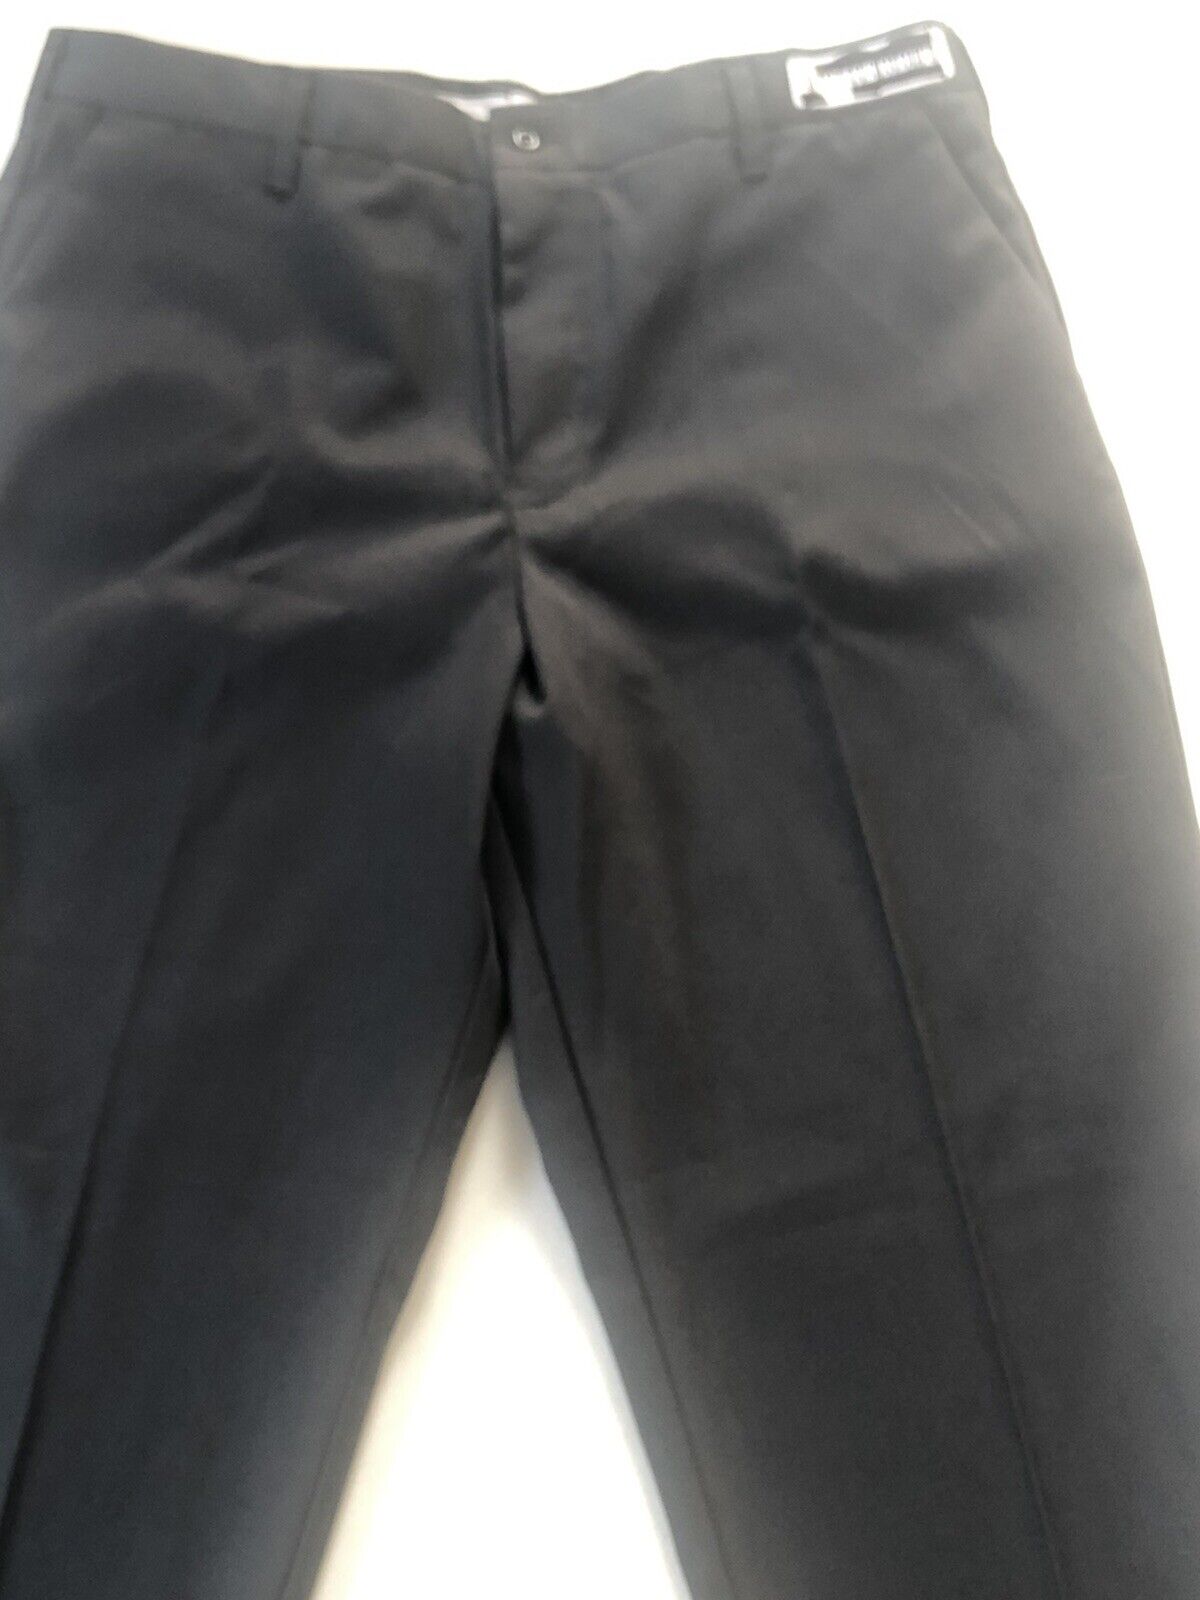 3 Cintas Comfort Flex Charcoal  Gray Work Pants Size 36x30 #945-33 cintas Does Not Apply - фотография #5